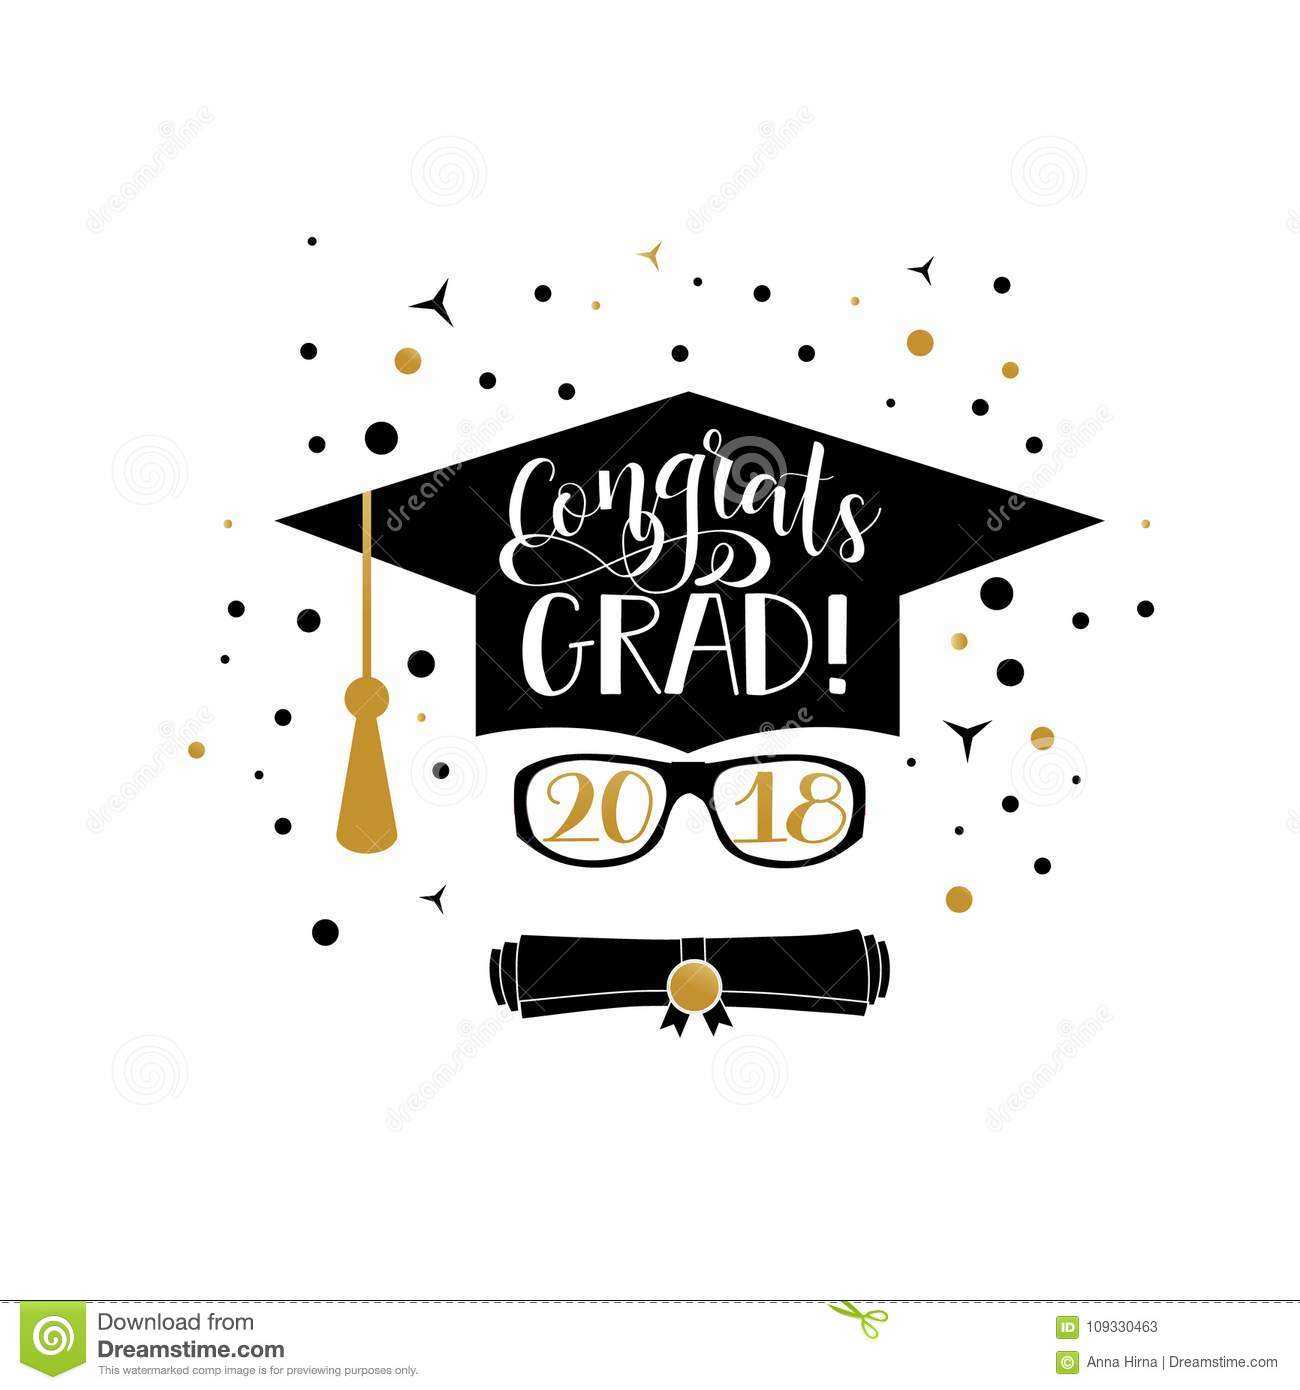 Congrats Grad 2018 Lettering. Congratulations Graduate Pertaining To Graduation Banner Template